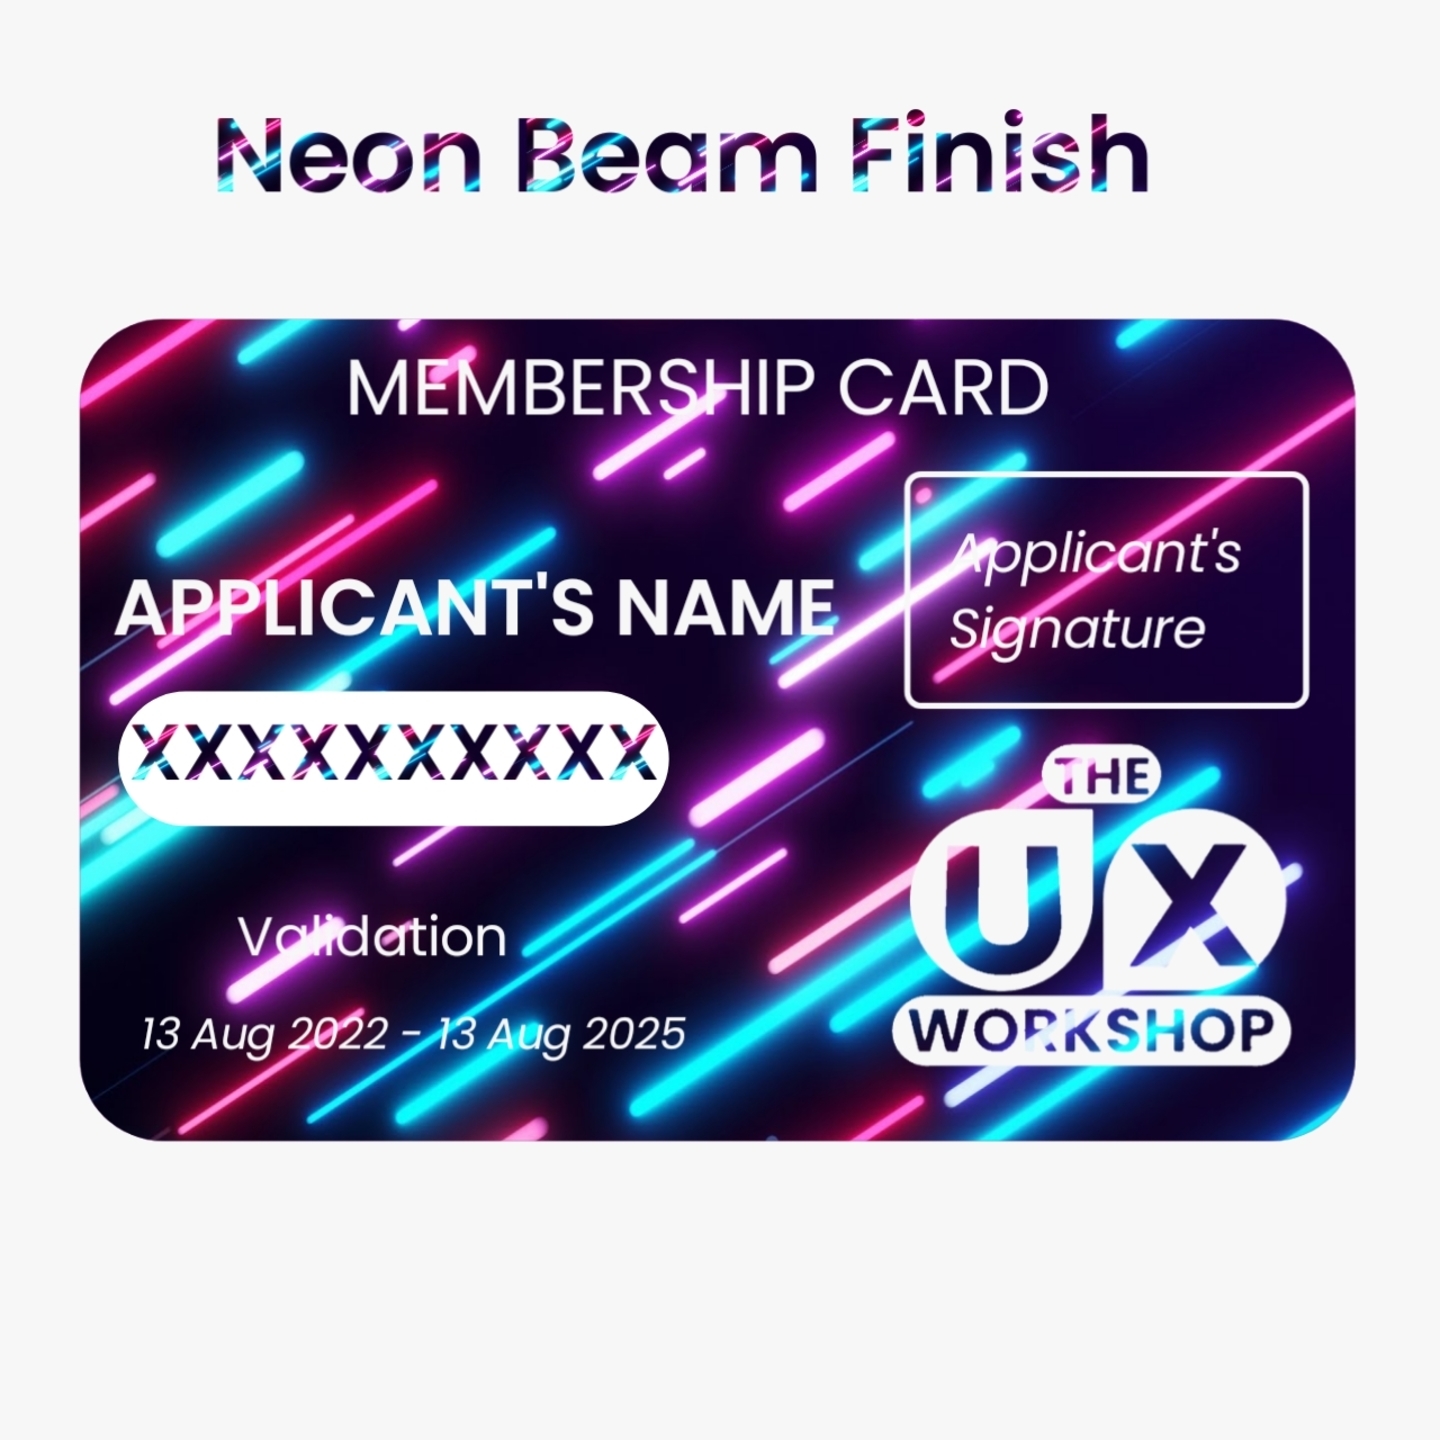 Neon Beam Finish for The UX Workshop Membership Card Skin 